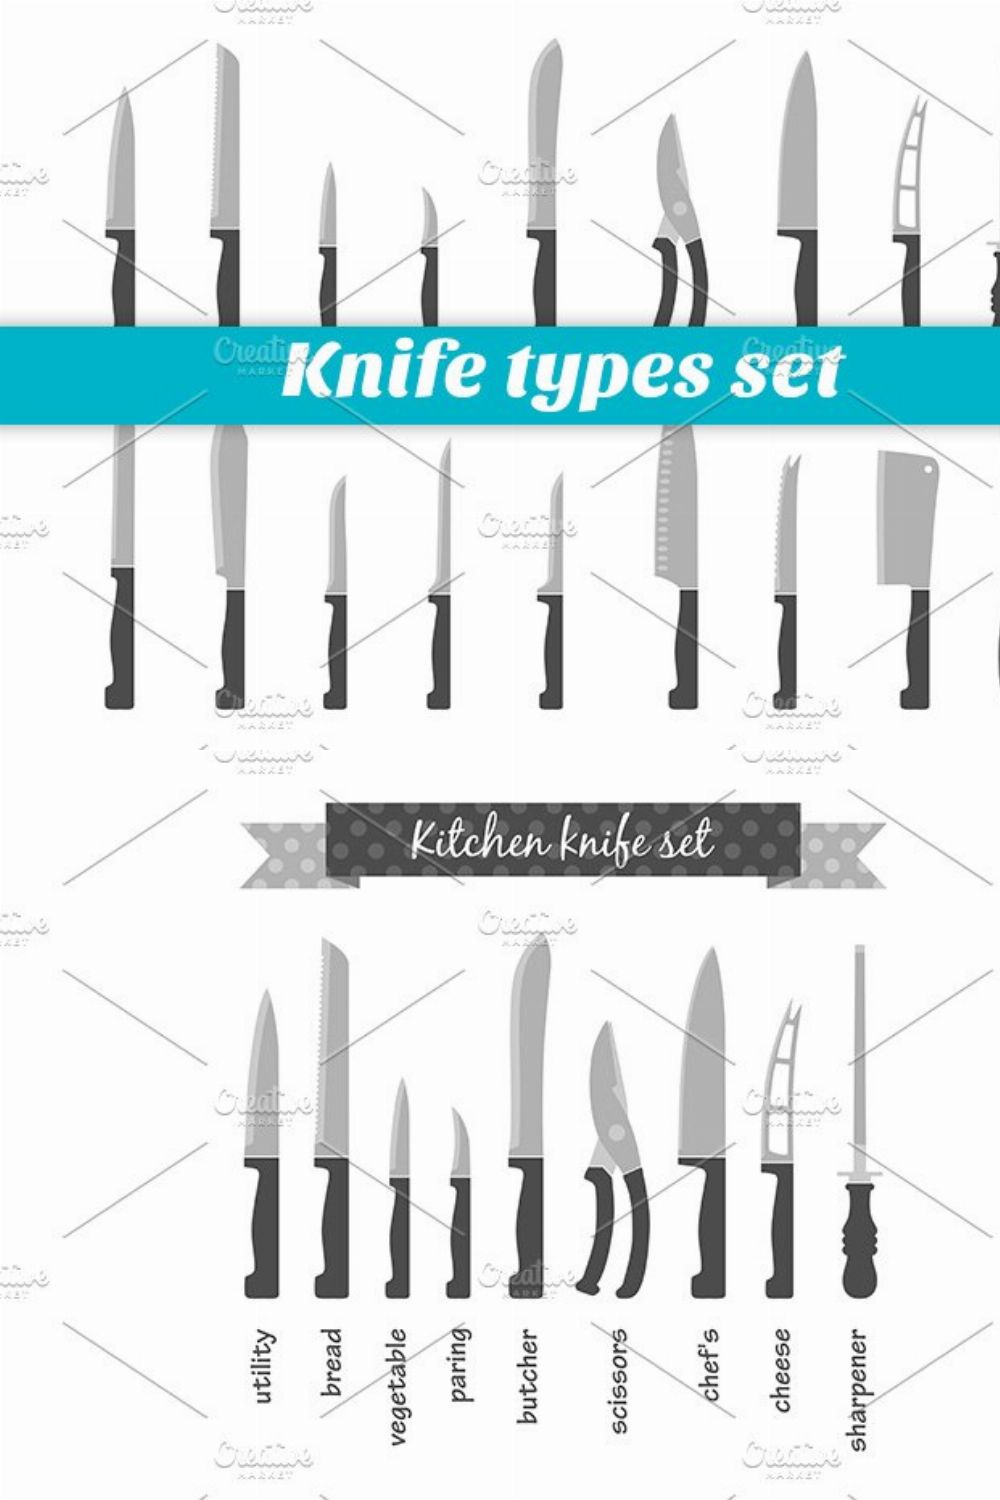 Knife types set pinterest preview image.